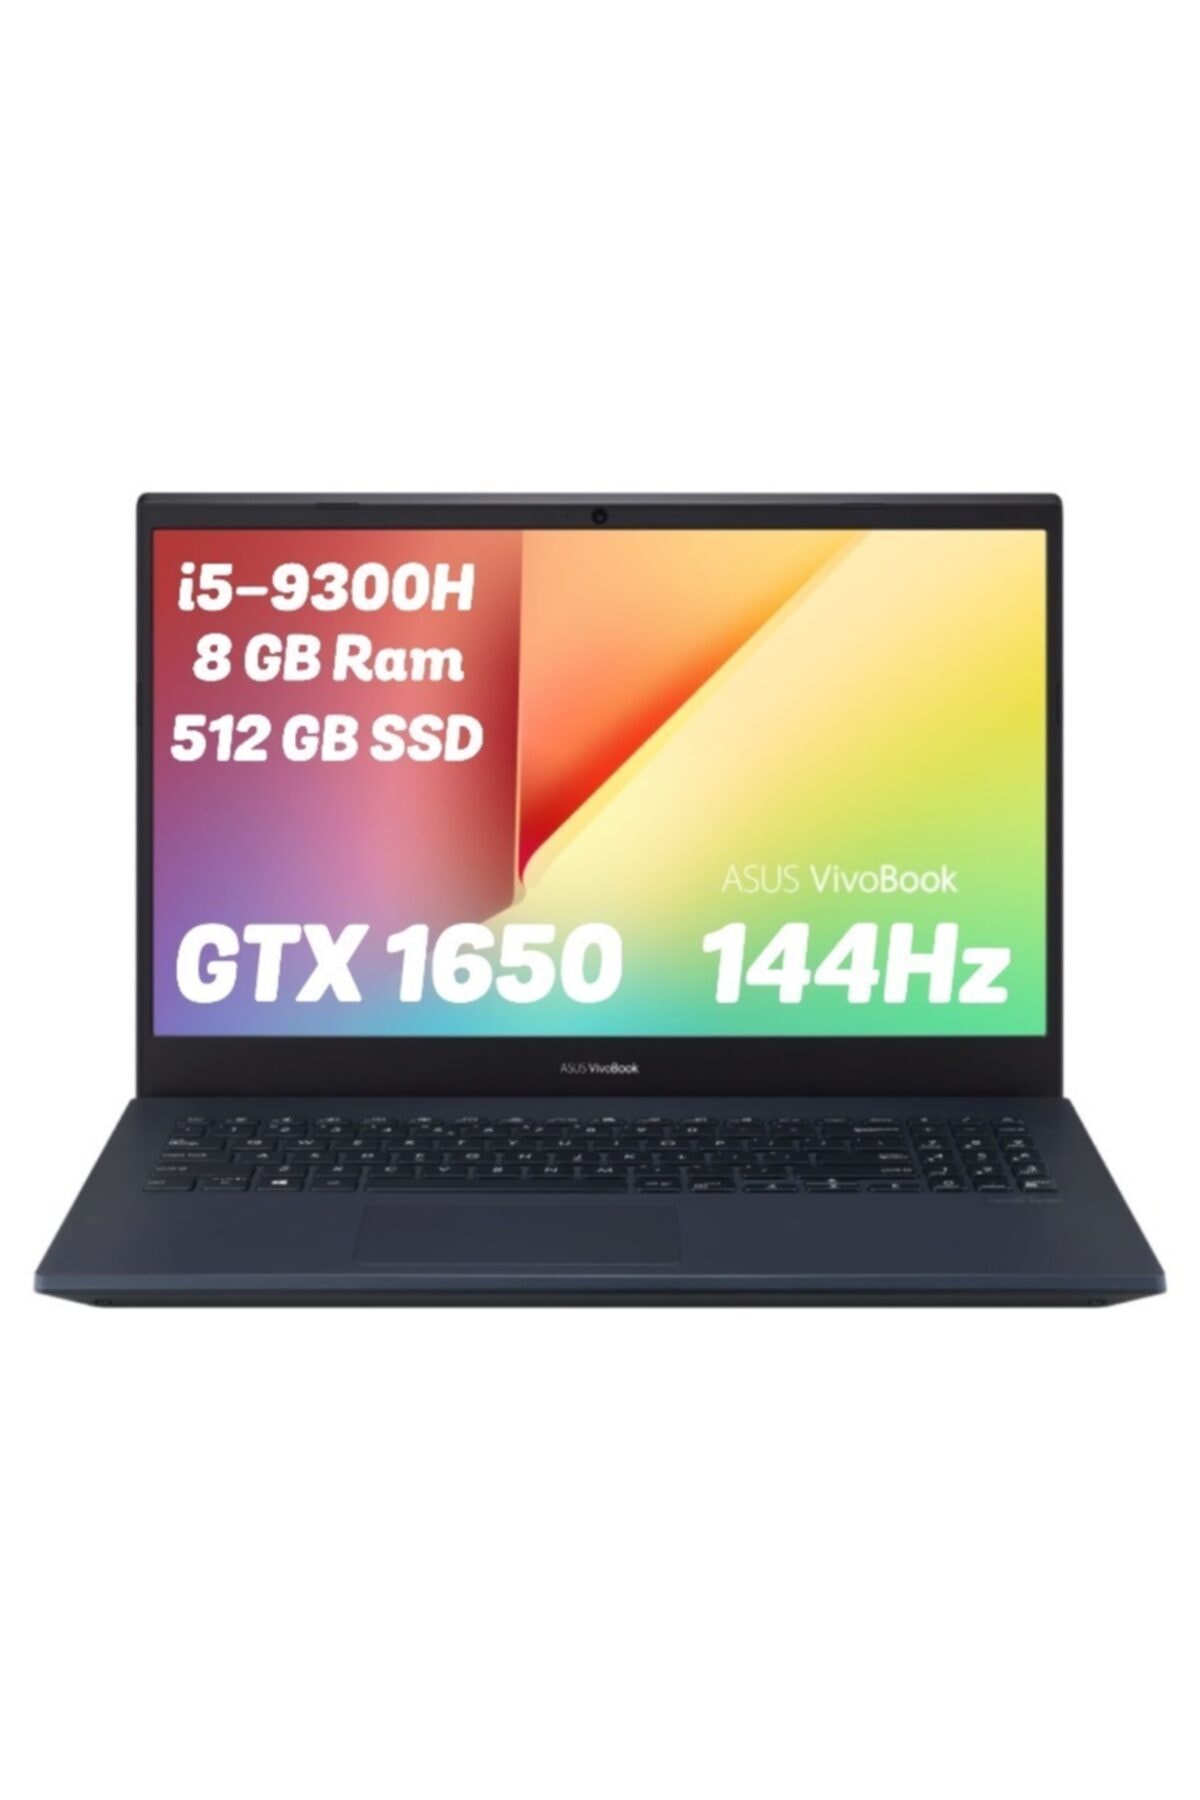 X571gt-gn1012 Intel Core I5-9300h 8 Gb Ram 512gb Ssd Gtx 1650 Freedos 15.6’’ Fhd 144hz Laptop